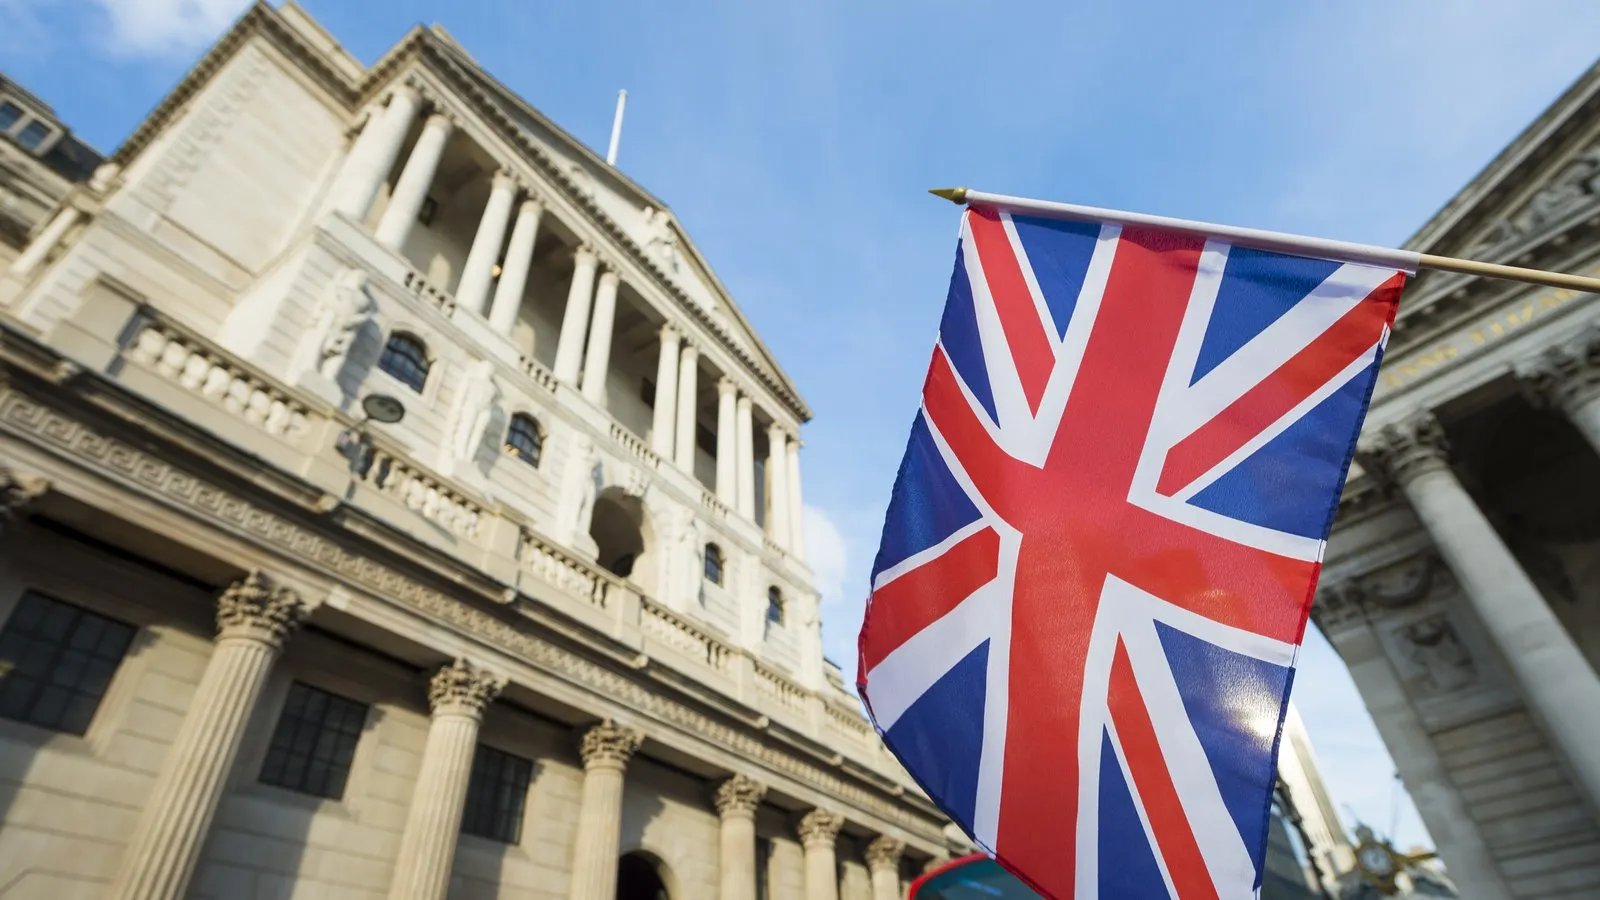 Bank of England. Image: Shutterstock